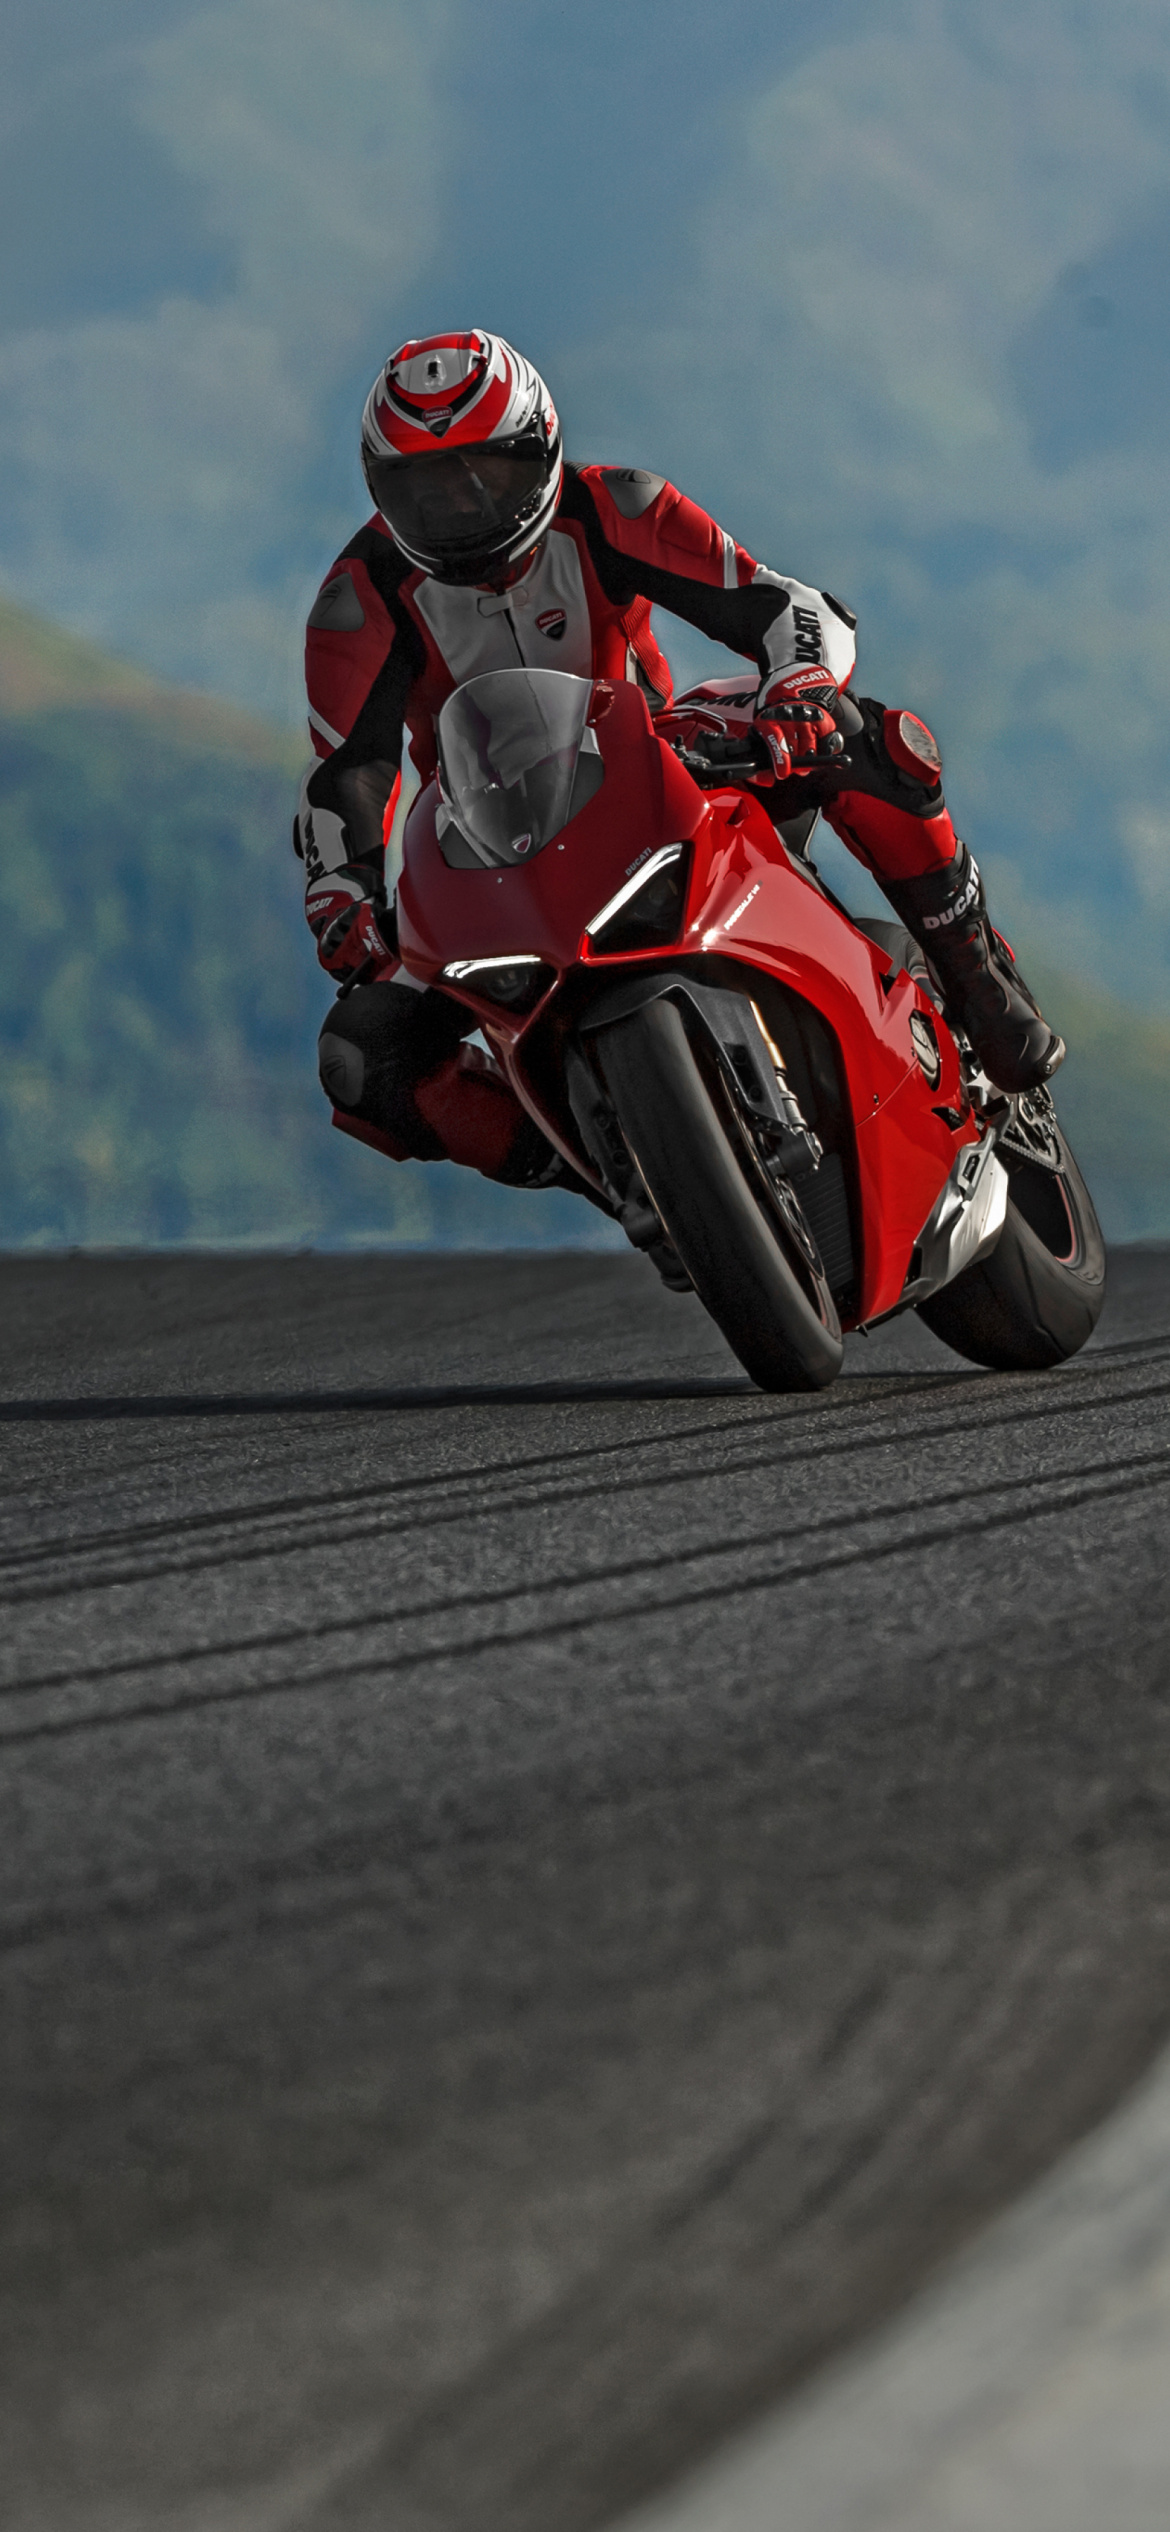 Ducati Panigale V4 18 Sport Bike Wallpaper For Iphone 12 Pro